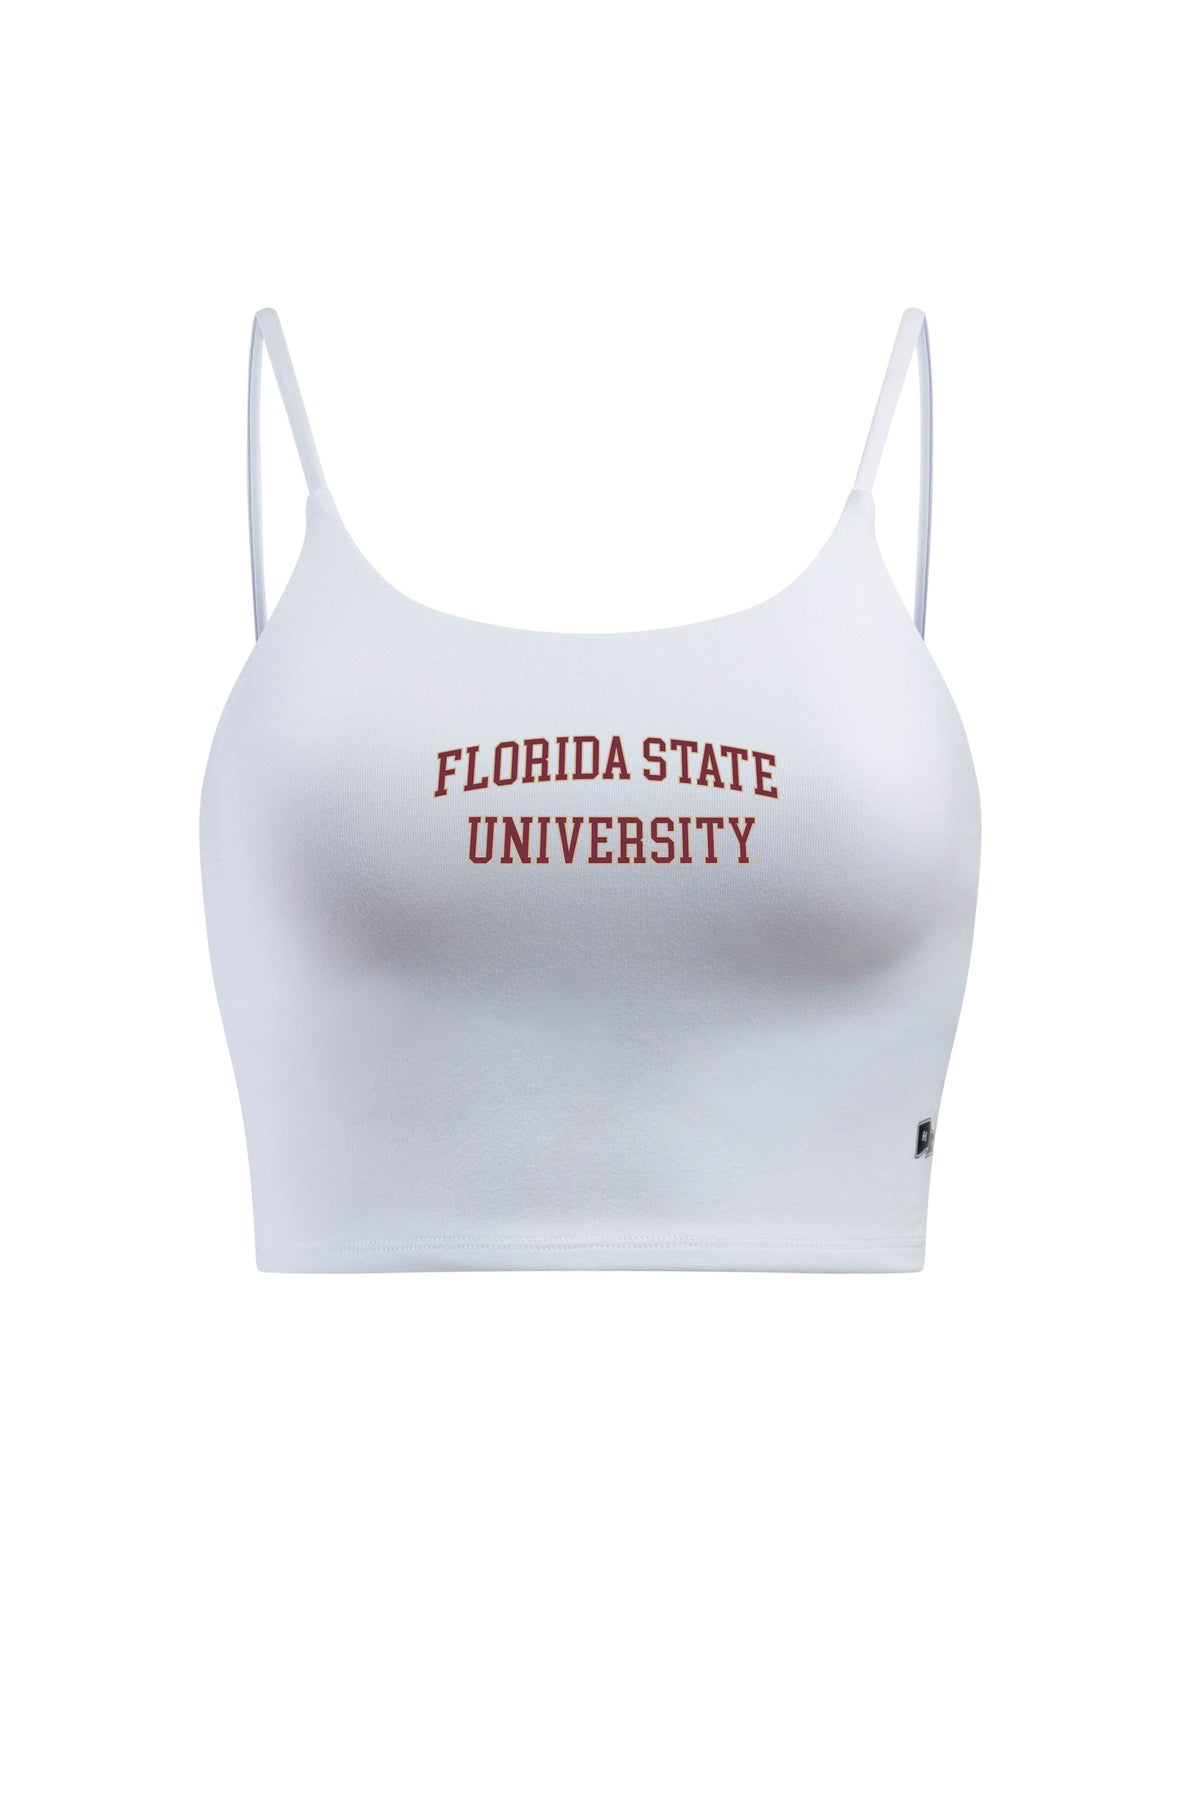 Florida State University Bra Tank Top